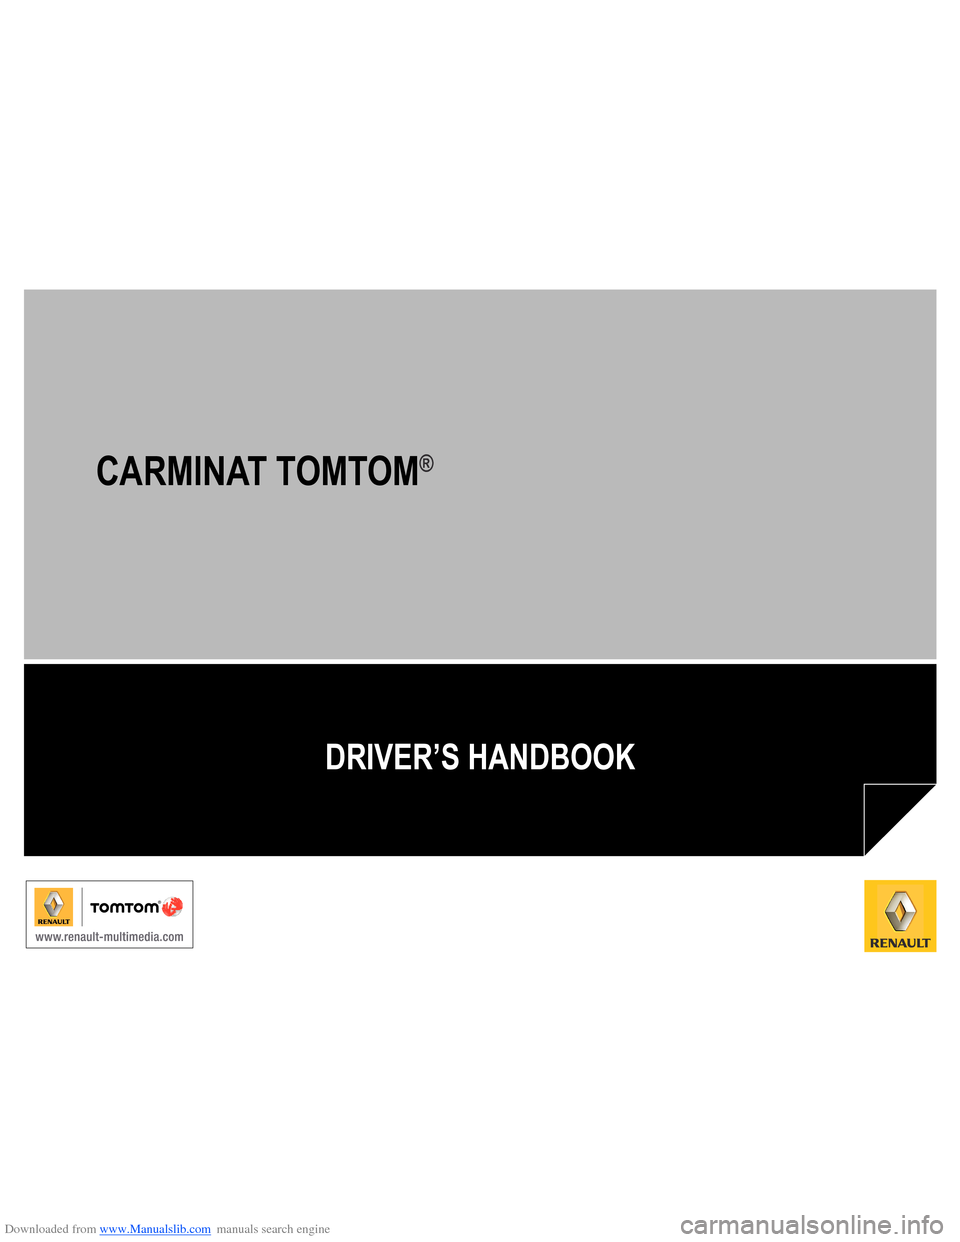 RENAULT CAPTUR 2013 1.G Carminat Tomtom Navigation Owners Manual Downloaded from www.Manualslib.com manuals search engine 
DRIVER’S HANDBOOK
CARMINAT TOMTOM®  